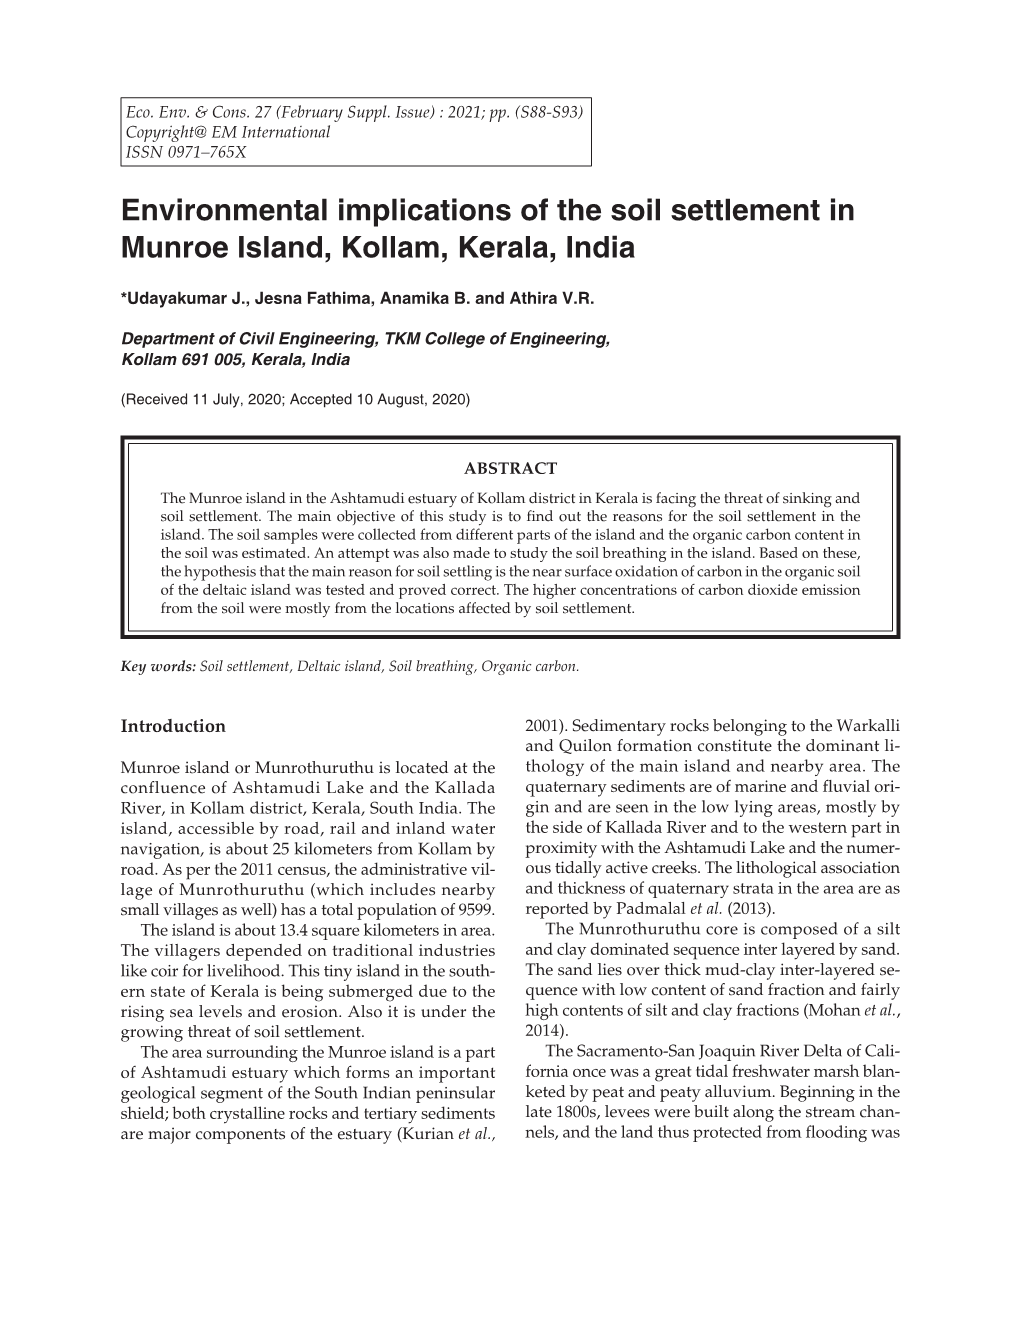 Environmental Implications of the Soil Settlement in Munroe Island, Kollam, Kerala, India